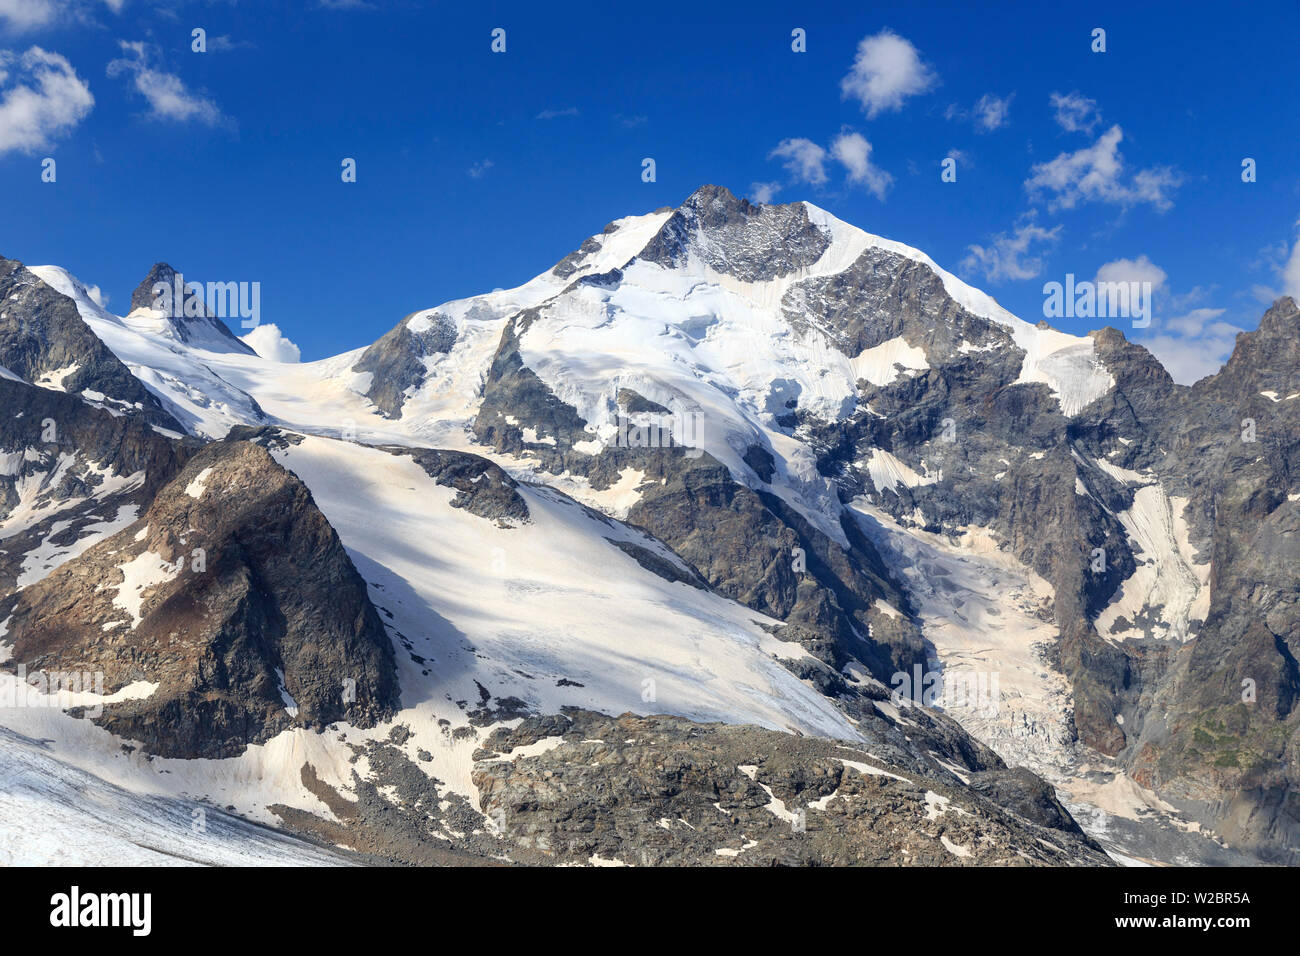 Switzerland, Graubunden, Upper Engadine, St. Moritz, Diavolezza (2978m), view of Glaciers and Piz Bernina Mountain (4049m) Stock Photo